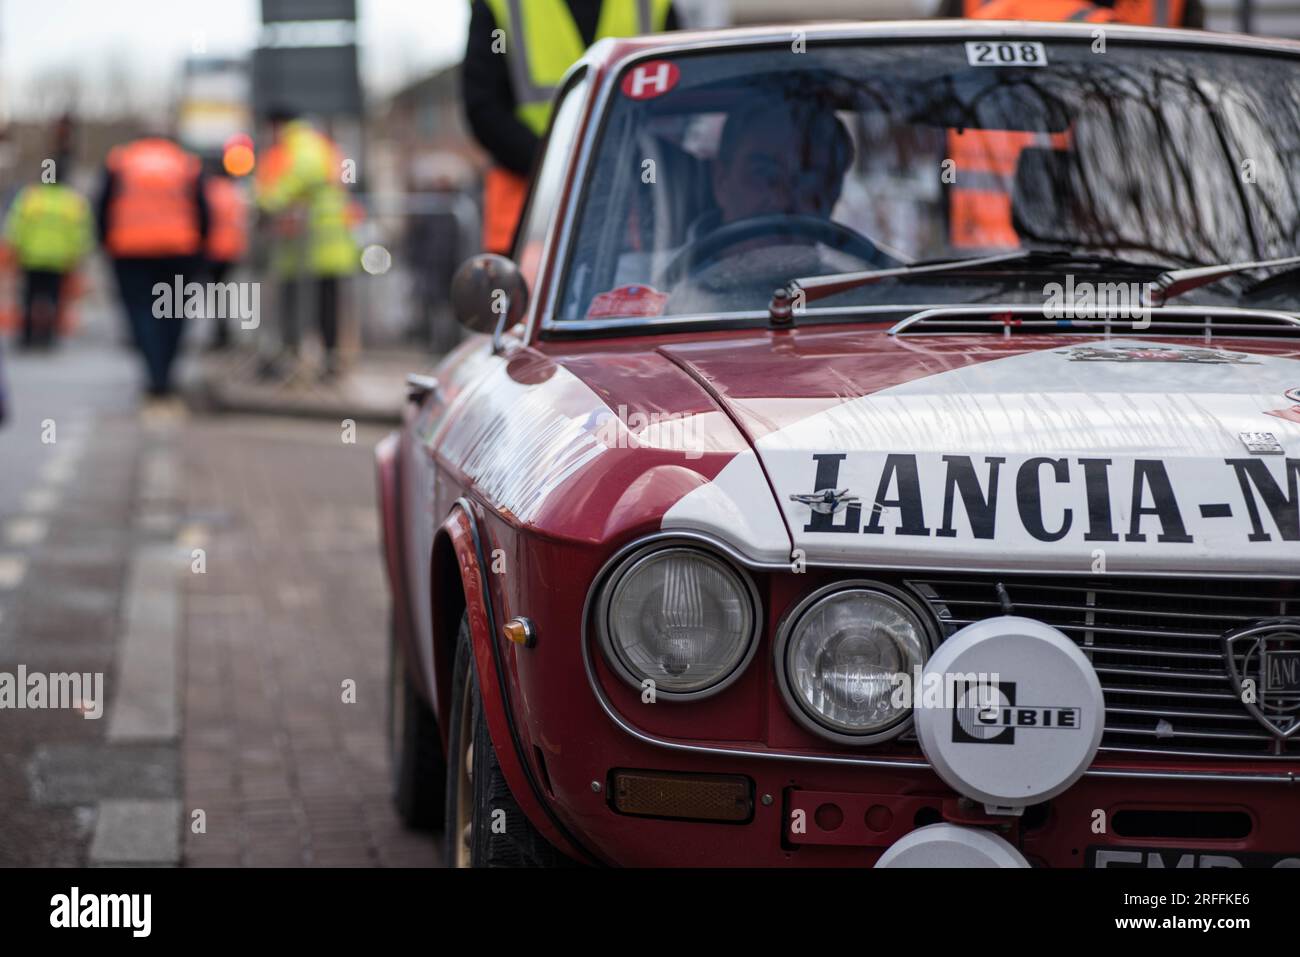 Lancia Fulvia Coupe in Marlboro Racing colours at the Monte Carlo Rallye Historique Stock Photo